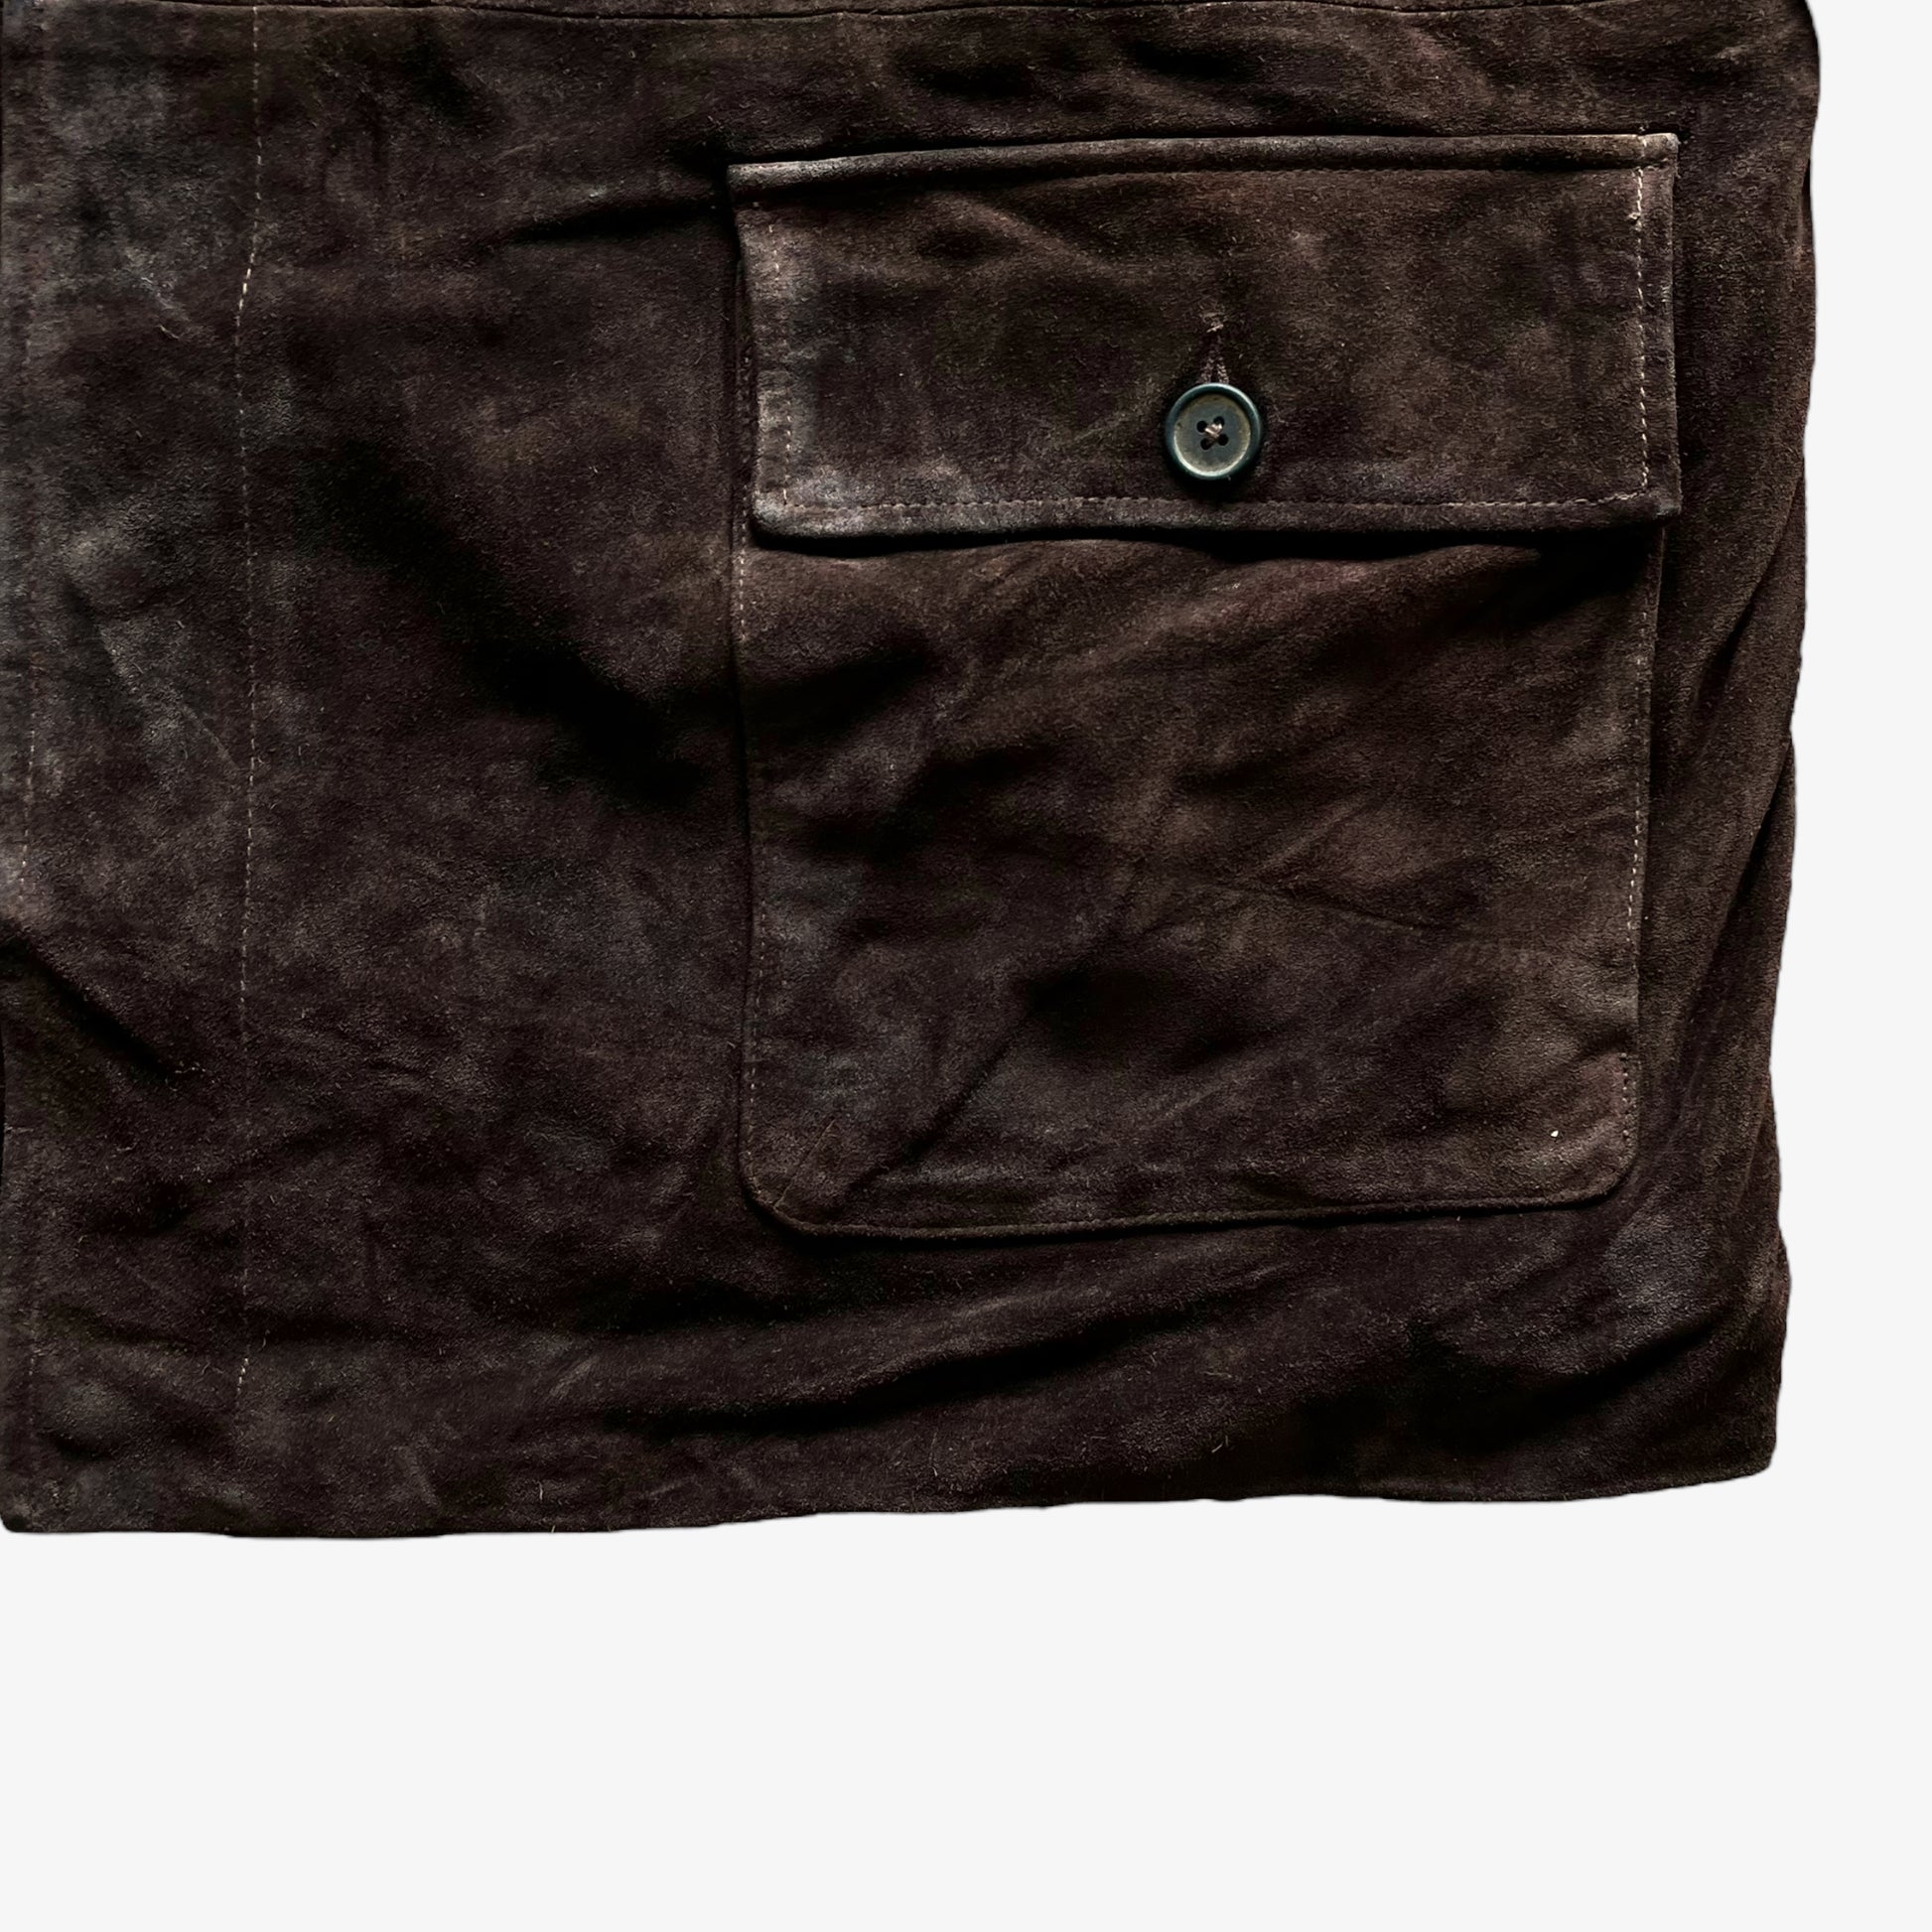 Vintage 90s Polo Ralph Lauren Brown Leather Jacket Pocket - Casspios Dream